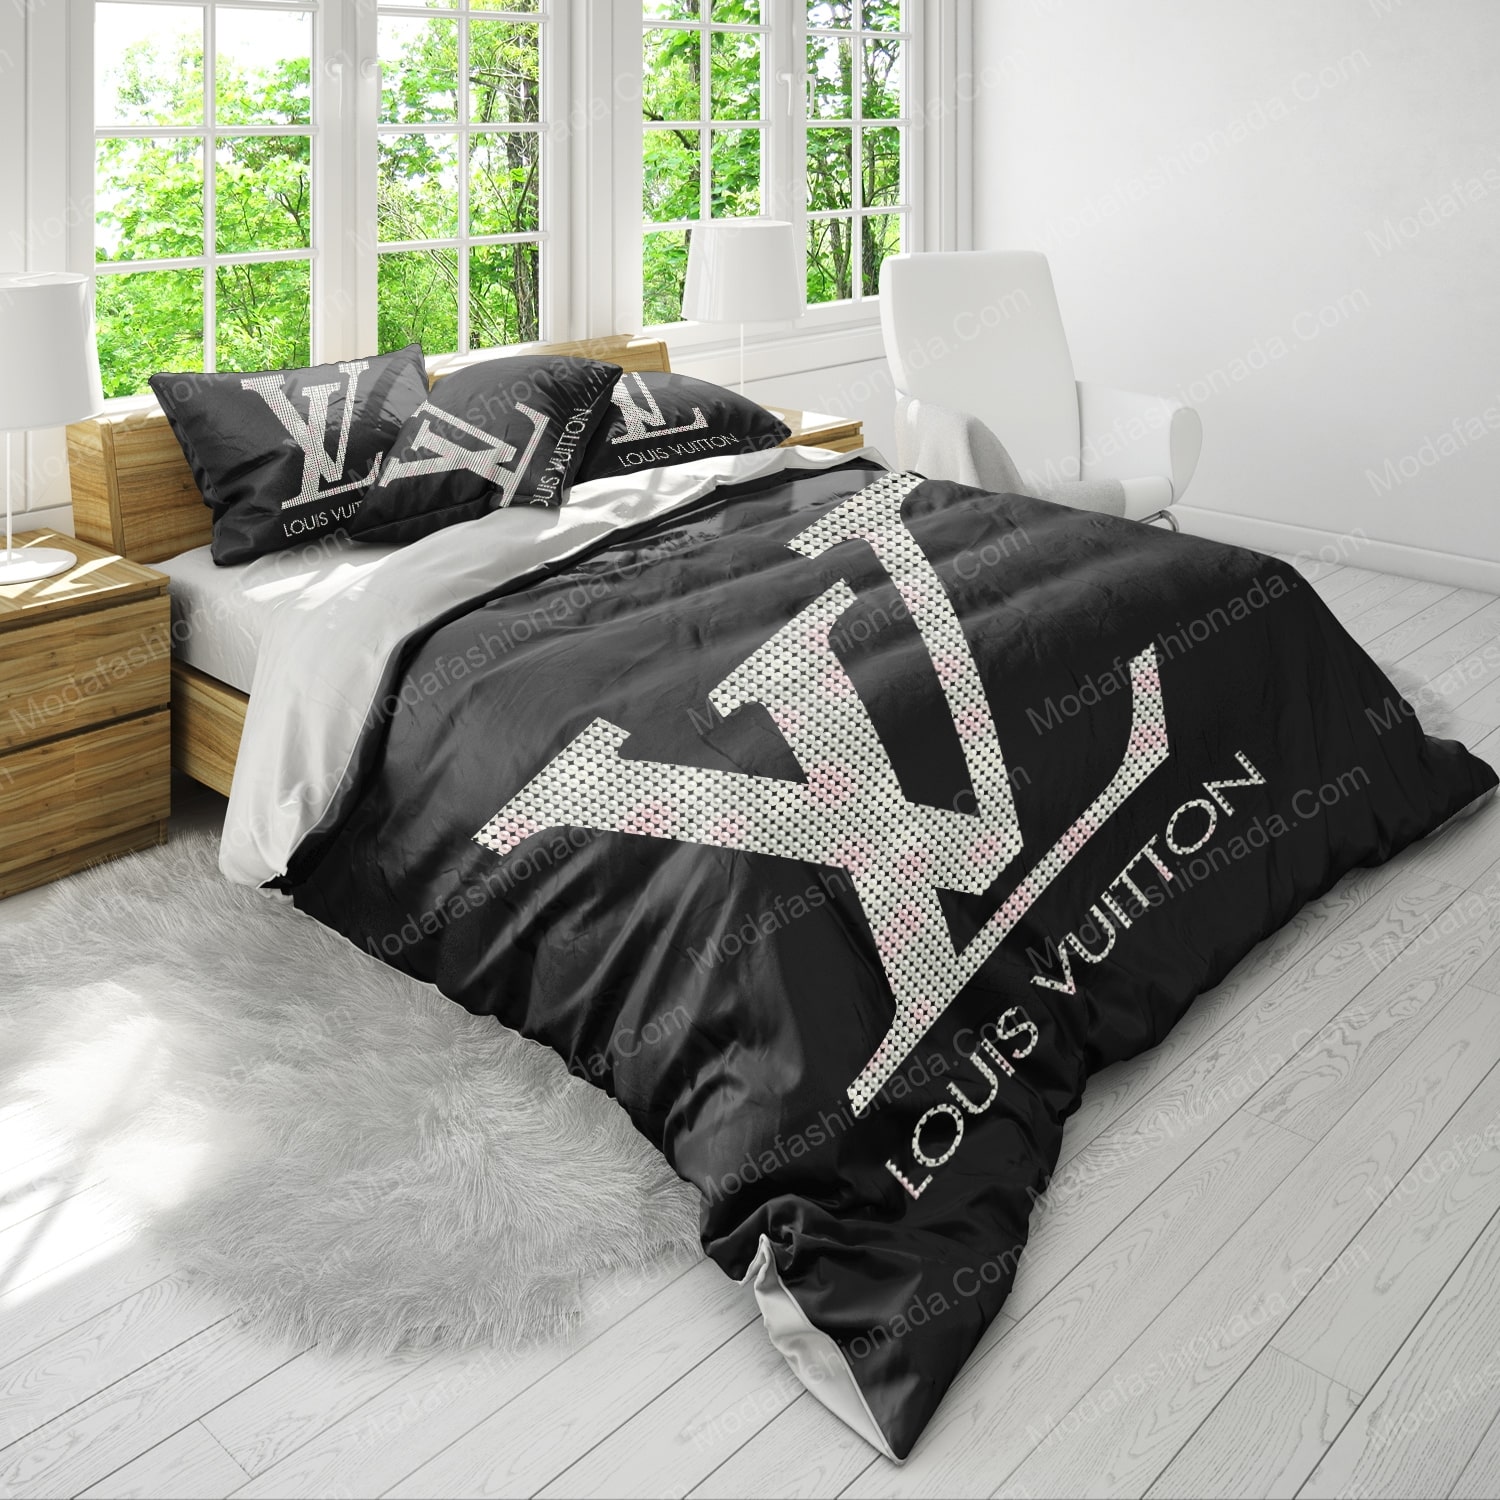 Louis Vuitton Luxury Brands 28 Bedding Set – Duvet Cover – 3D New